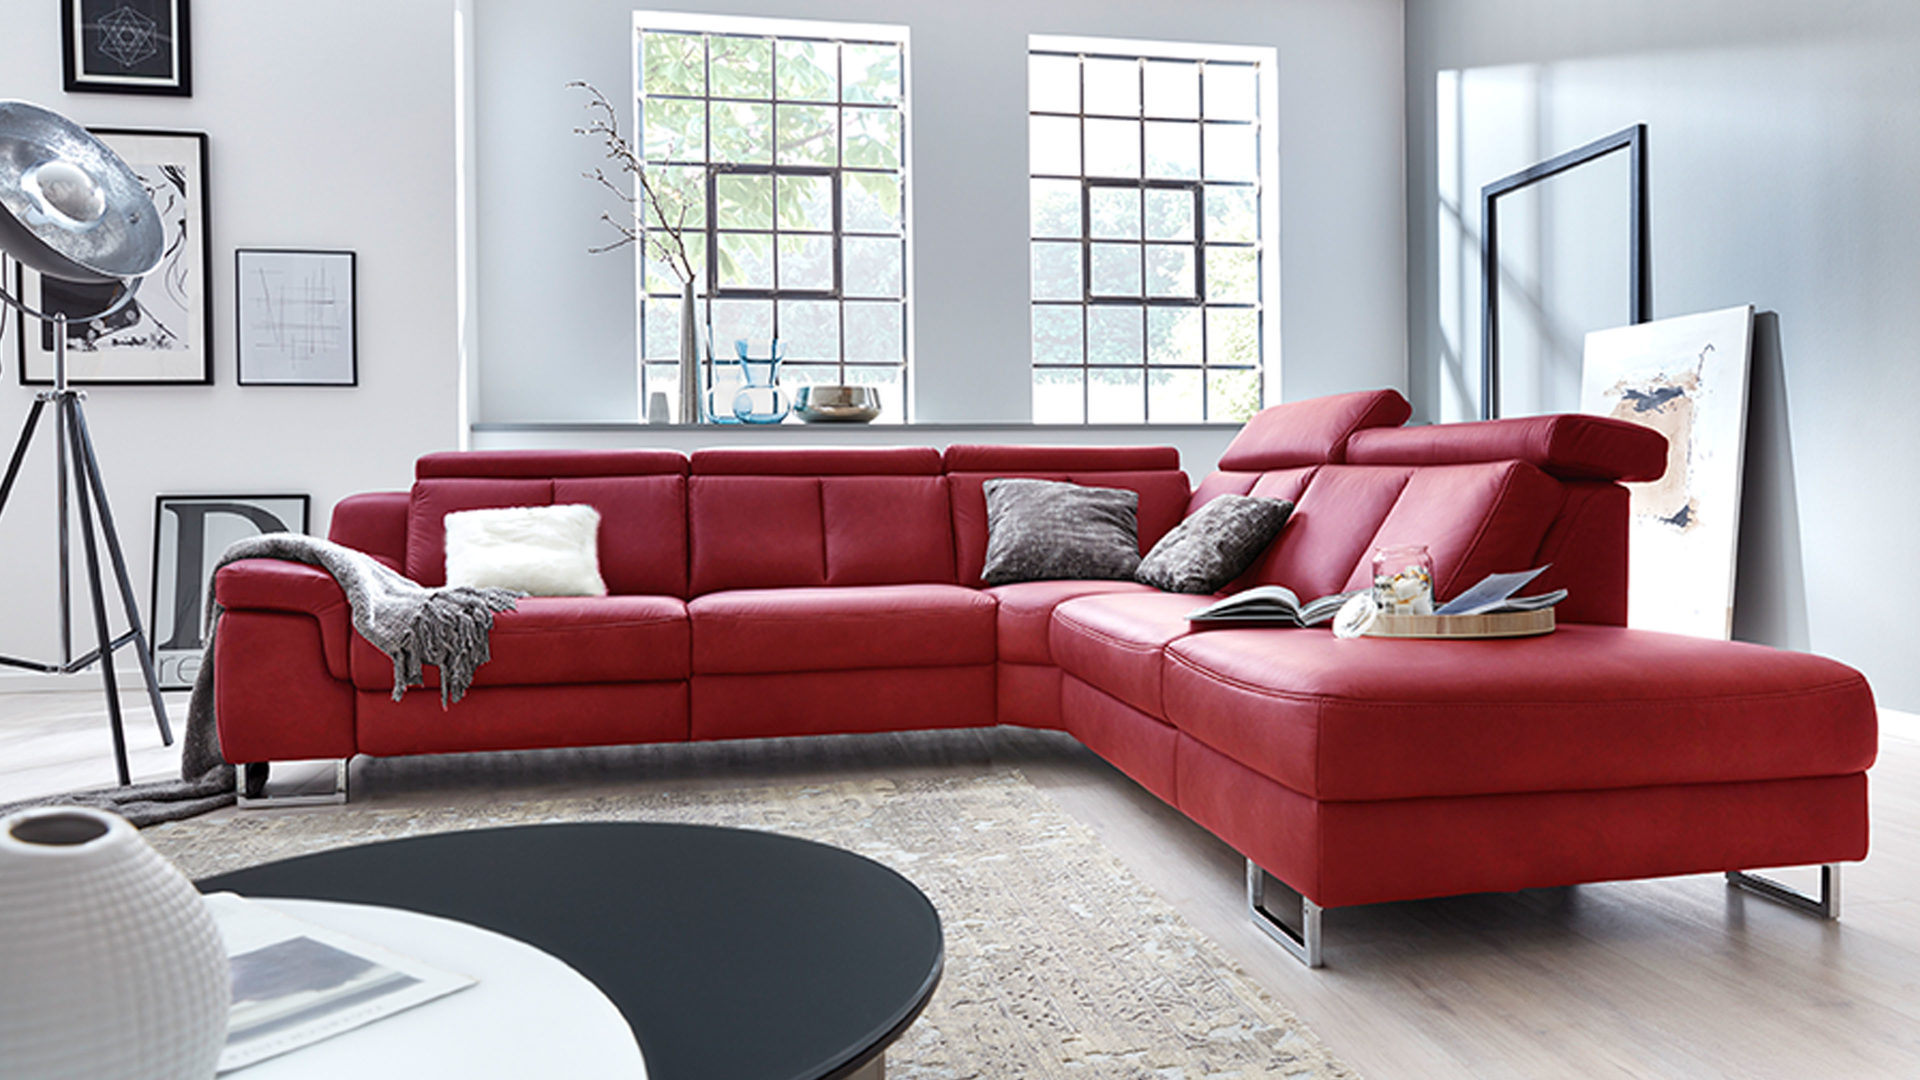 Ecksofa Interliving aus Leder in Rot Interliving Sofa Serie 4050 – Ecksofa rotes LongLife-Leder Cloudy & Chromfüße – Stellfläche ca. 300 x 261 cm